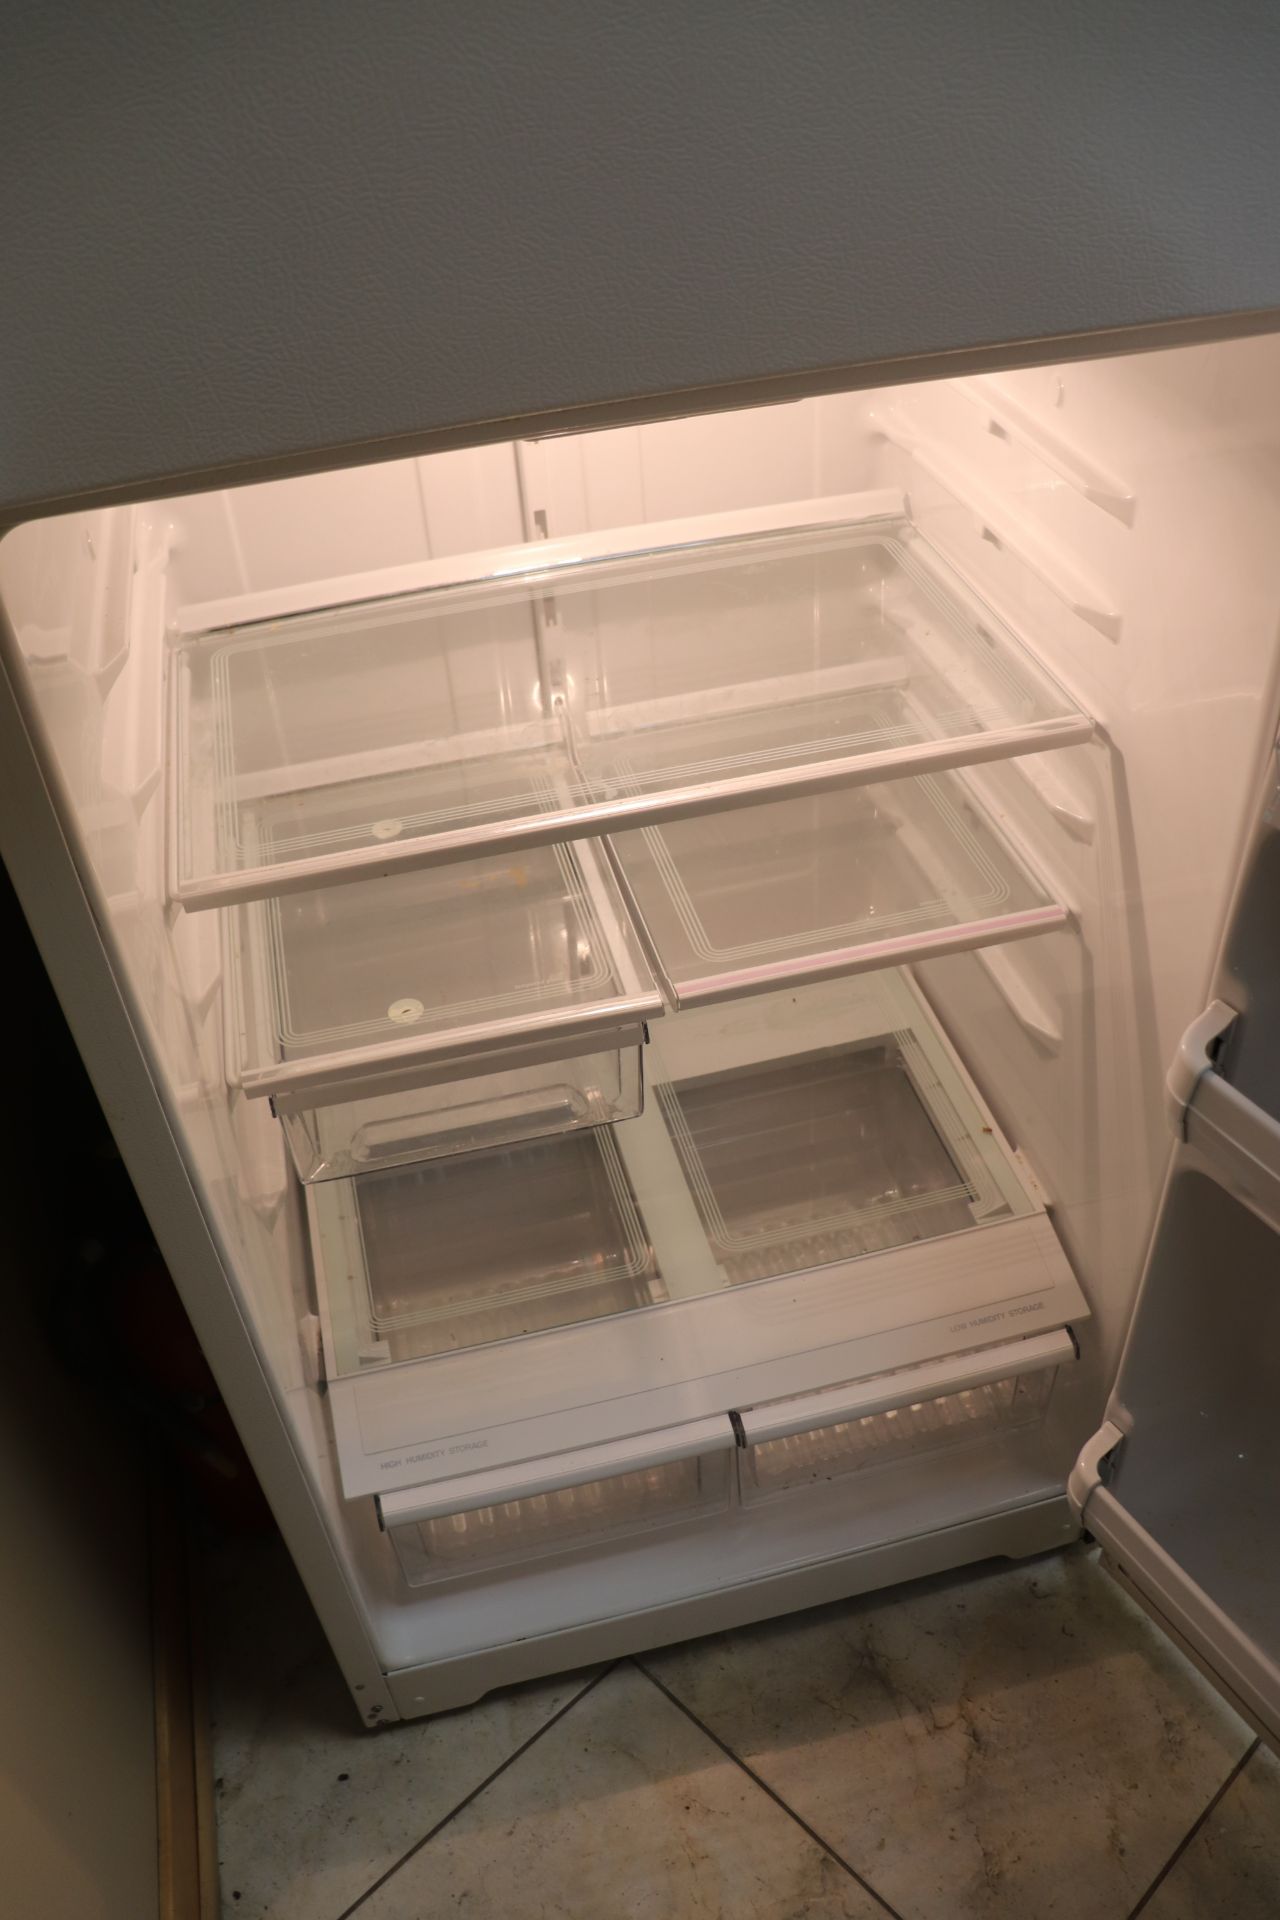 Hotpoint refrigerator, model CTX16HABNRWW - Image 3 of 3